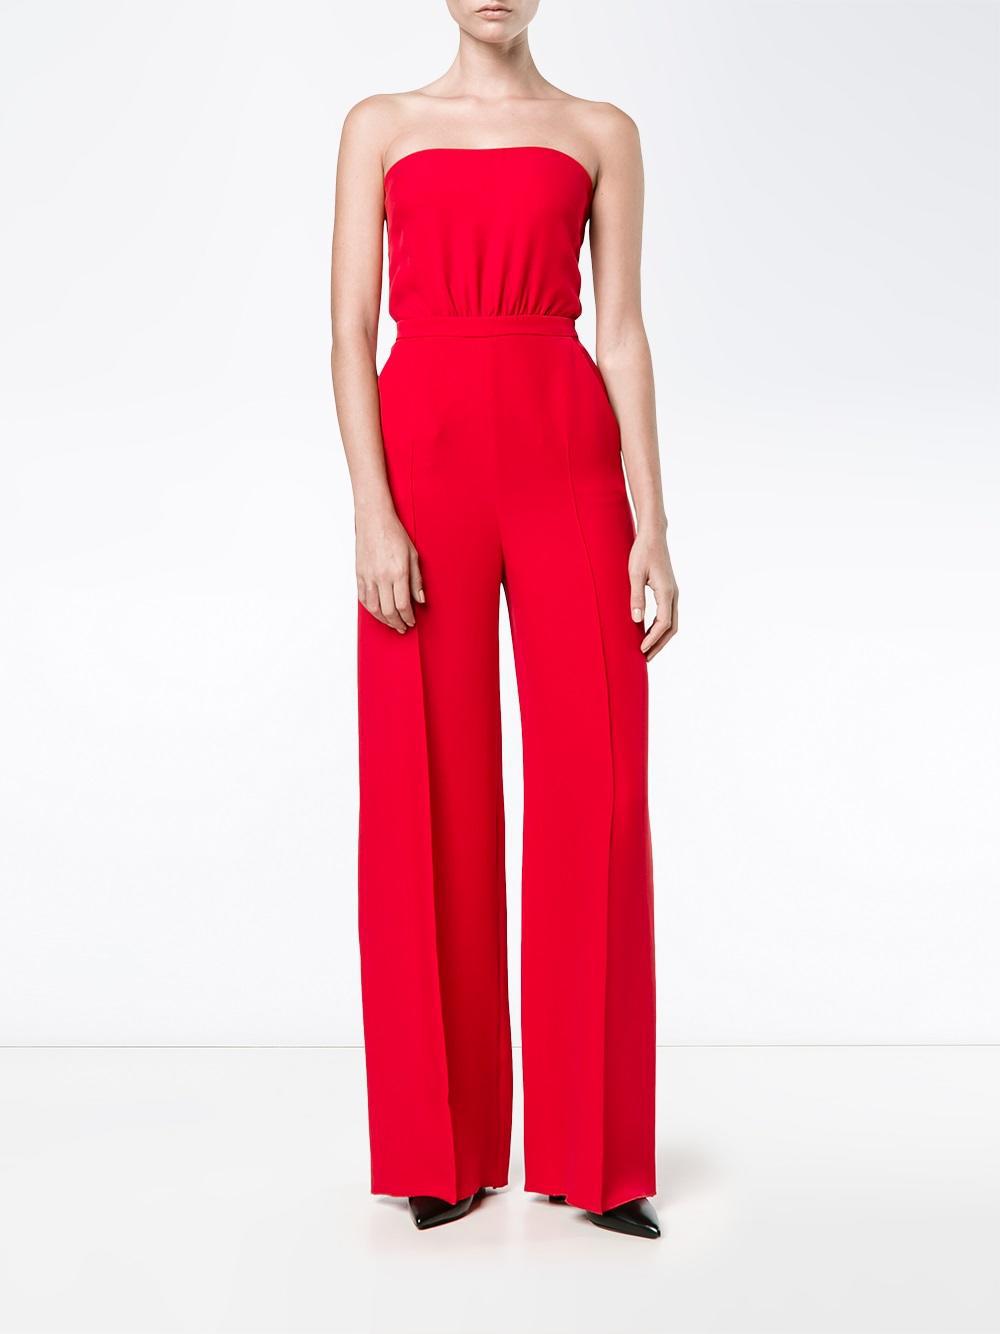 Valentino Silk Strapless Jumpsuit in Red - Lyst